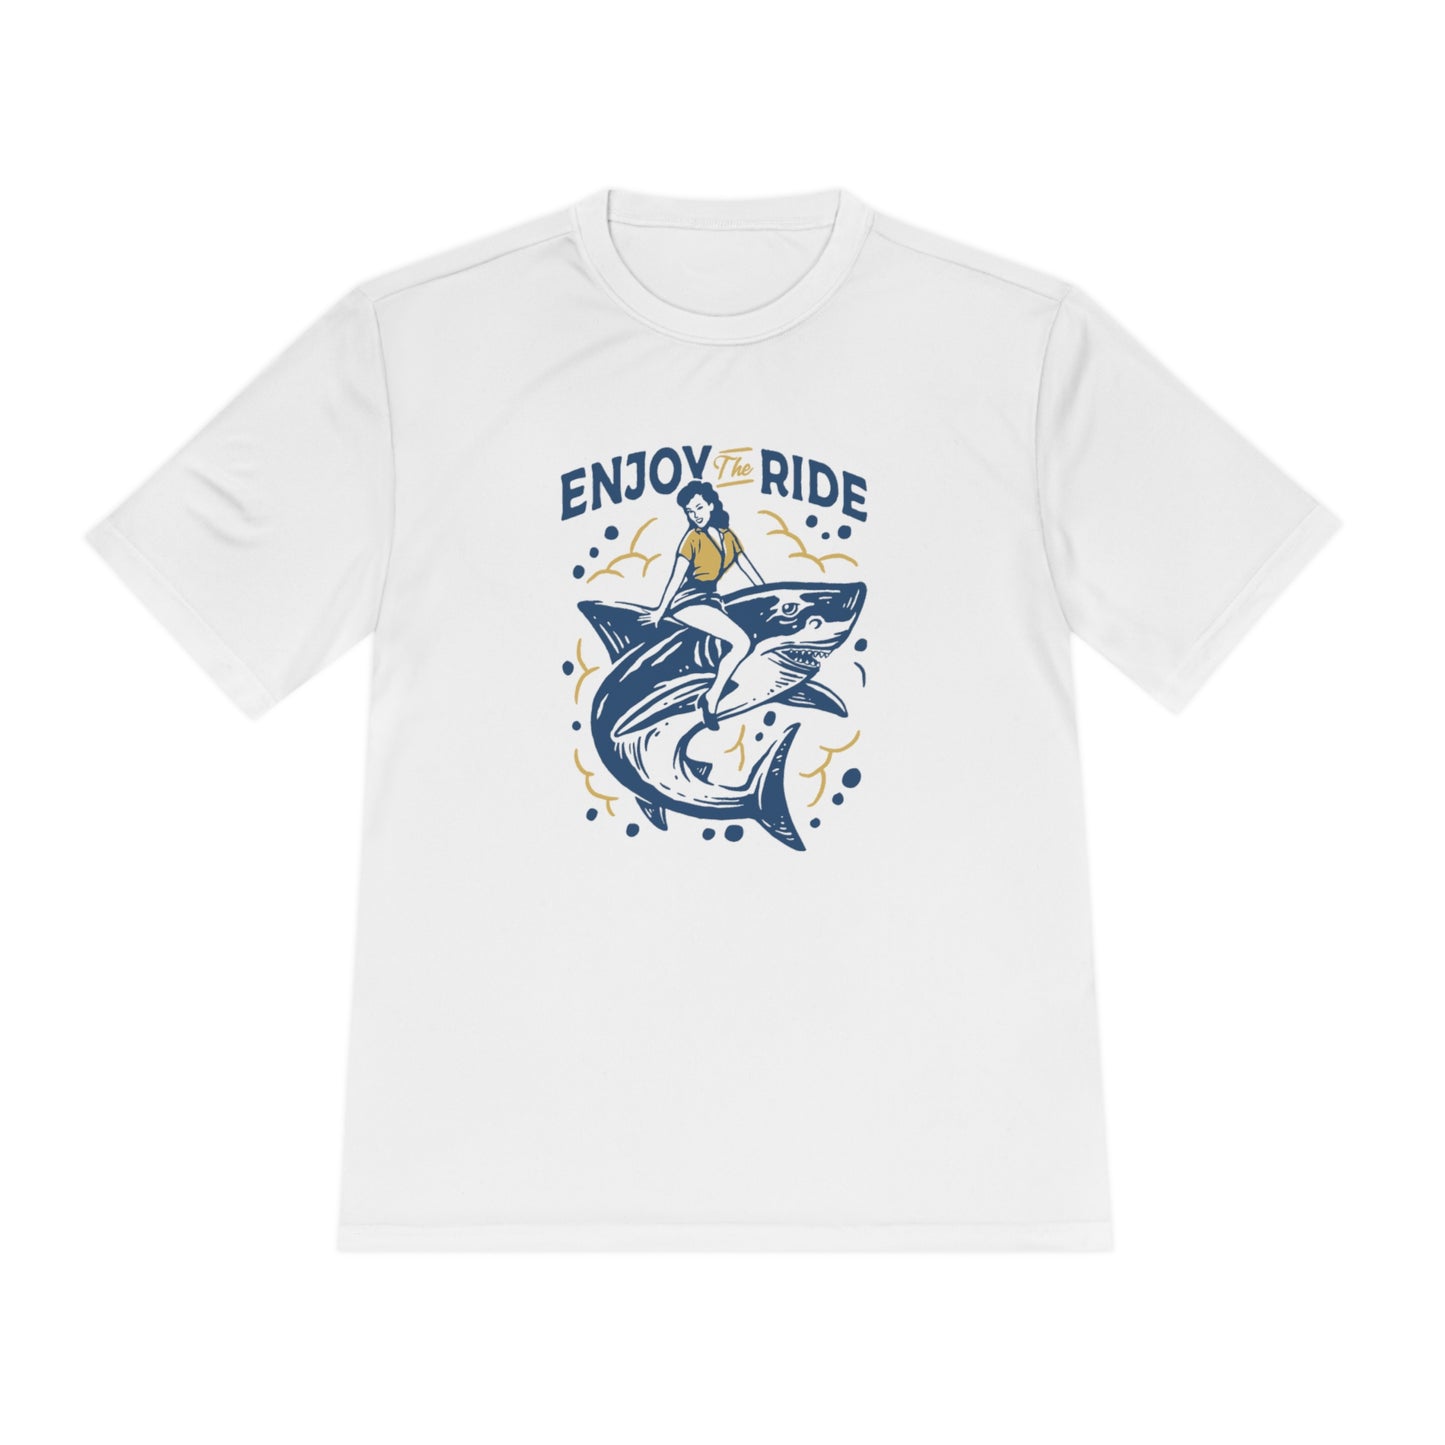 Fun Shark T-Shirt For Enjoy The Ride TShirt For Girl Riding Shark T Shirt For Pinup Tee For Beach Tee For Moisture Wicking Sport Shirt